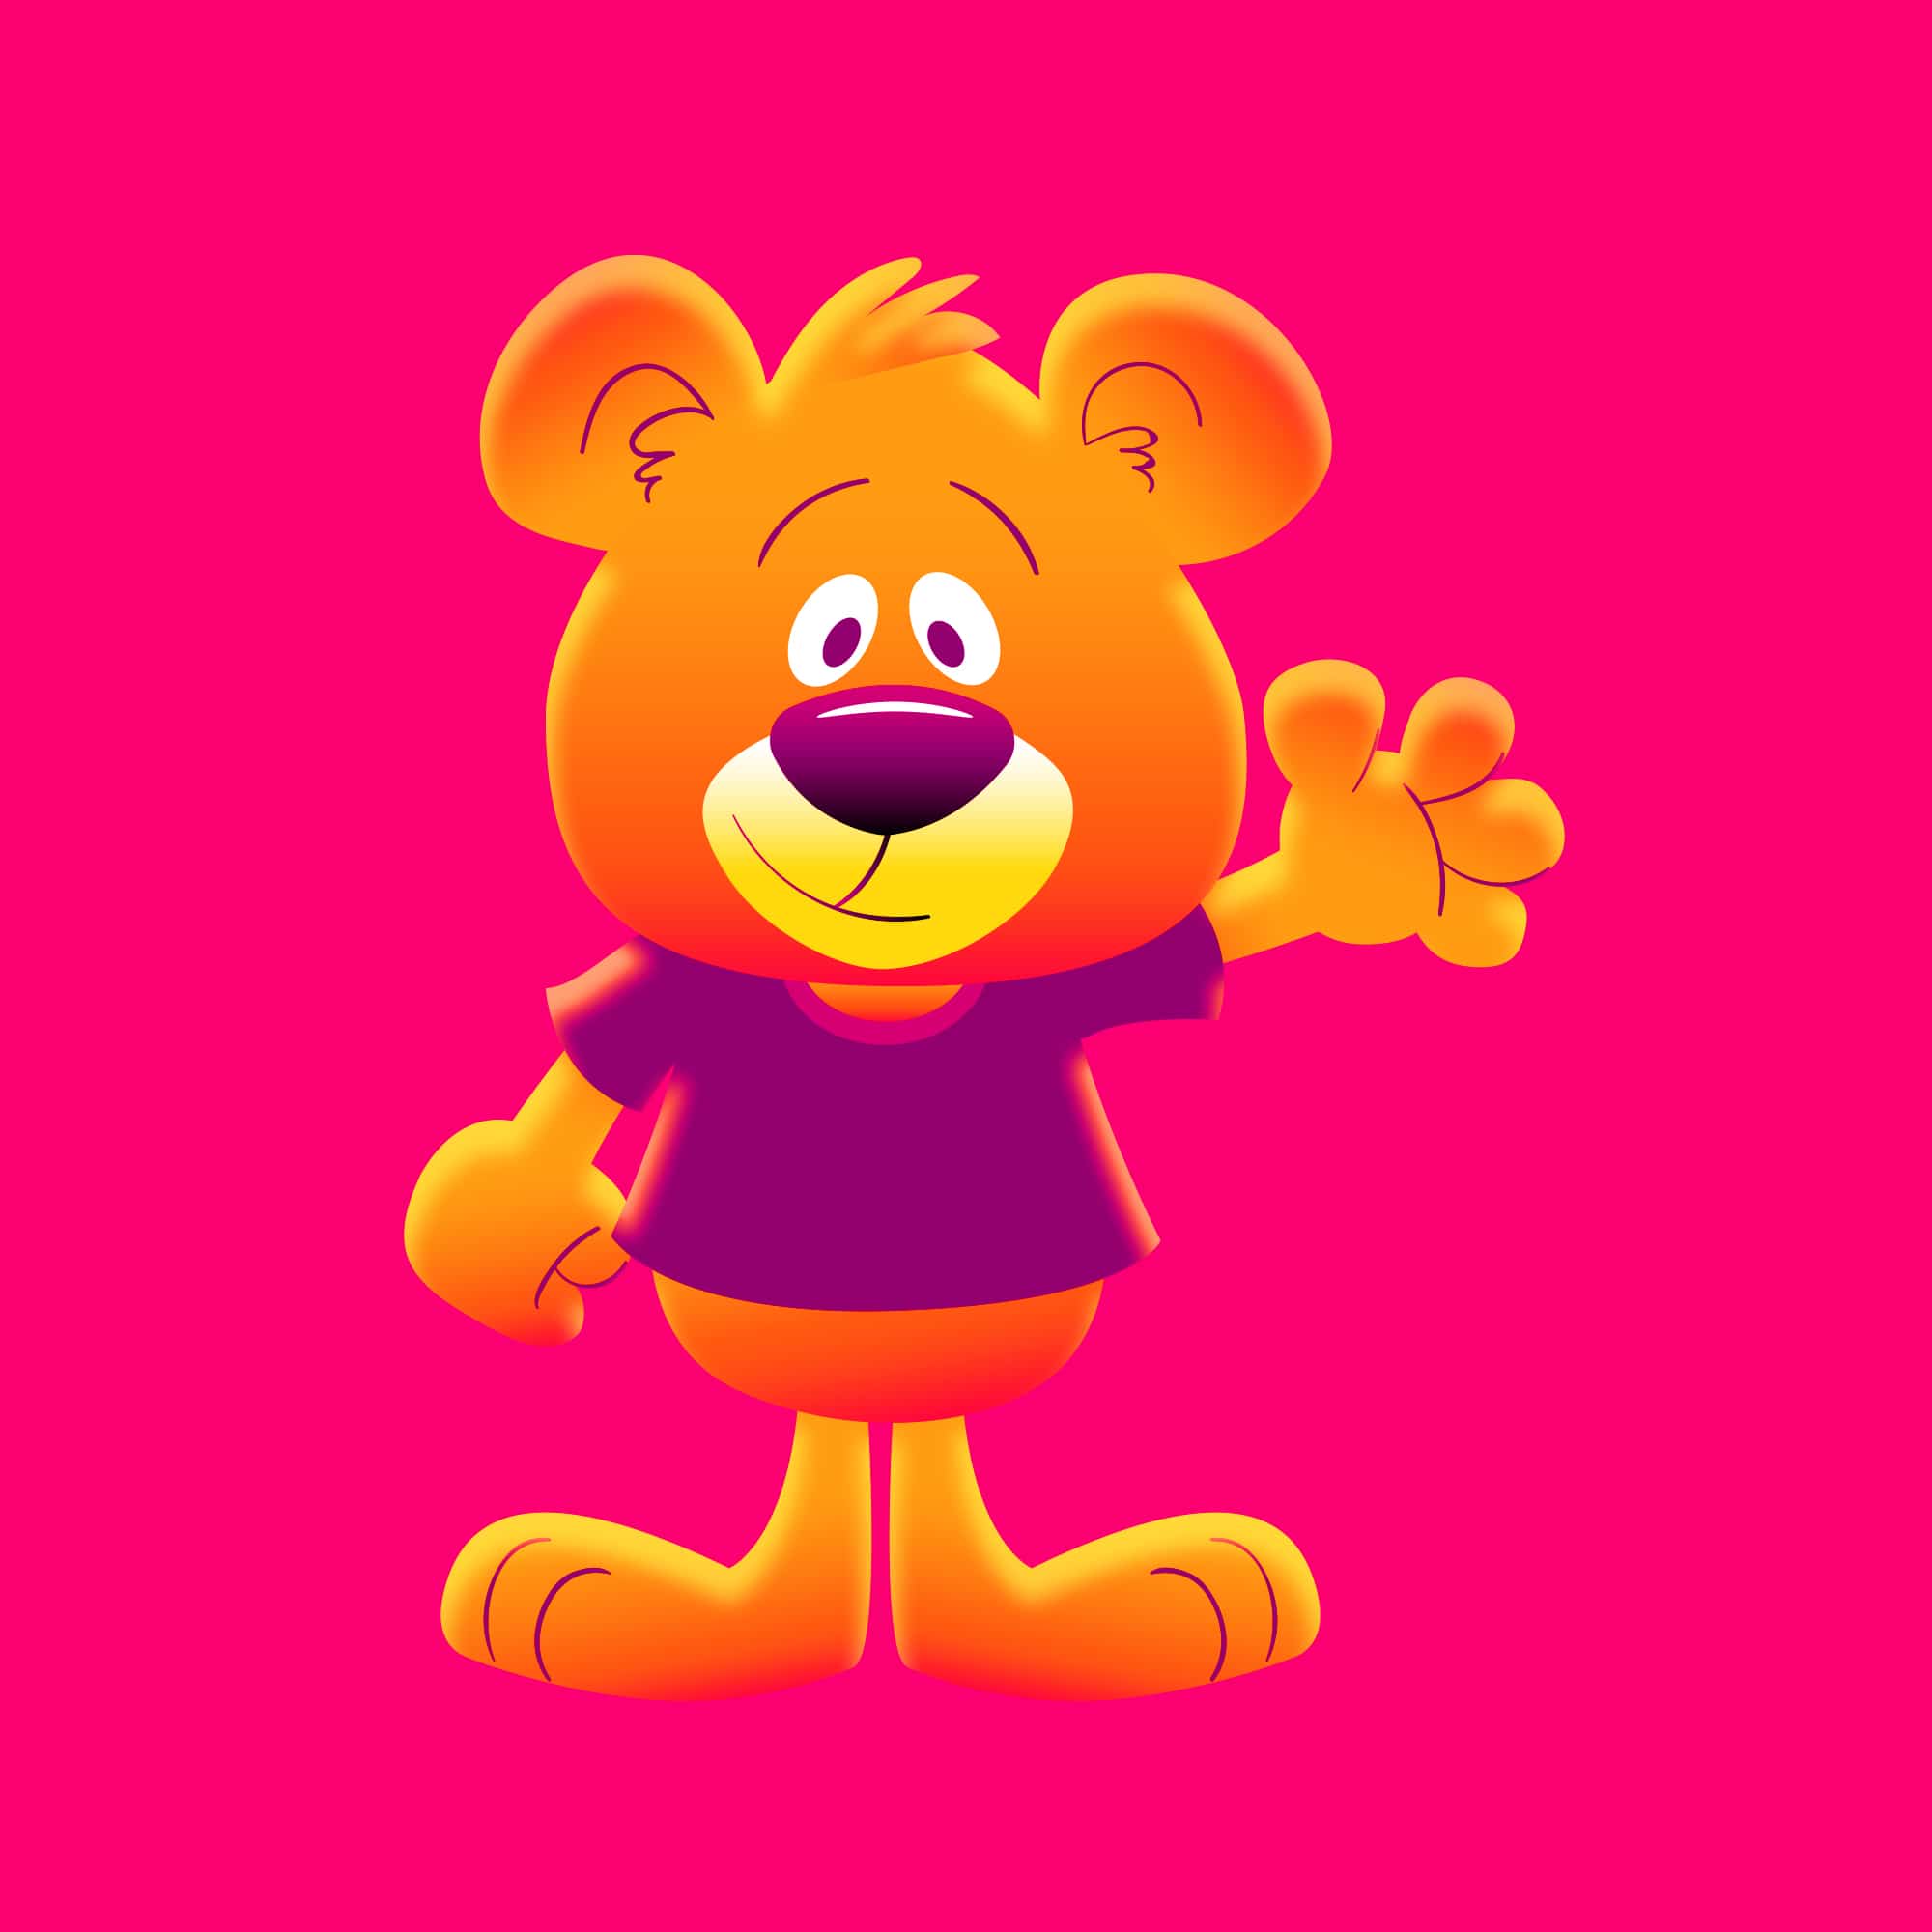 Buddy the Bear - Mascot Design Concept